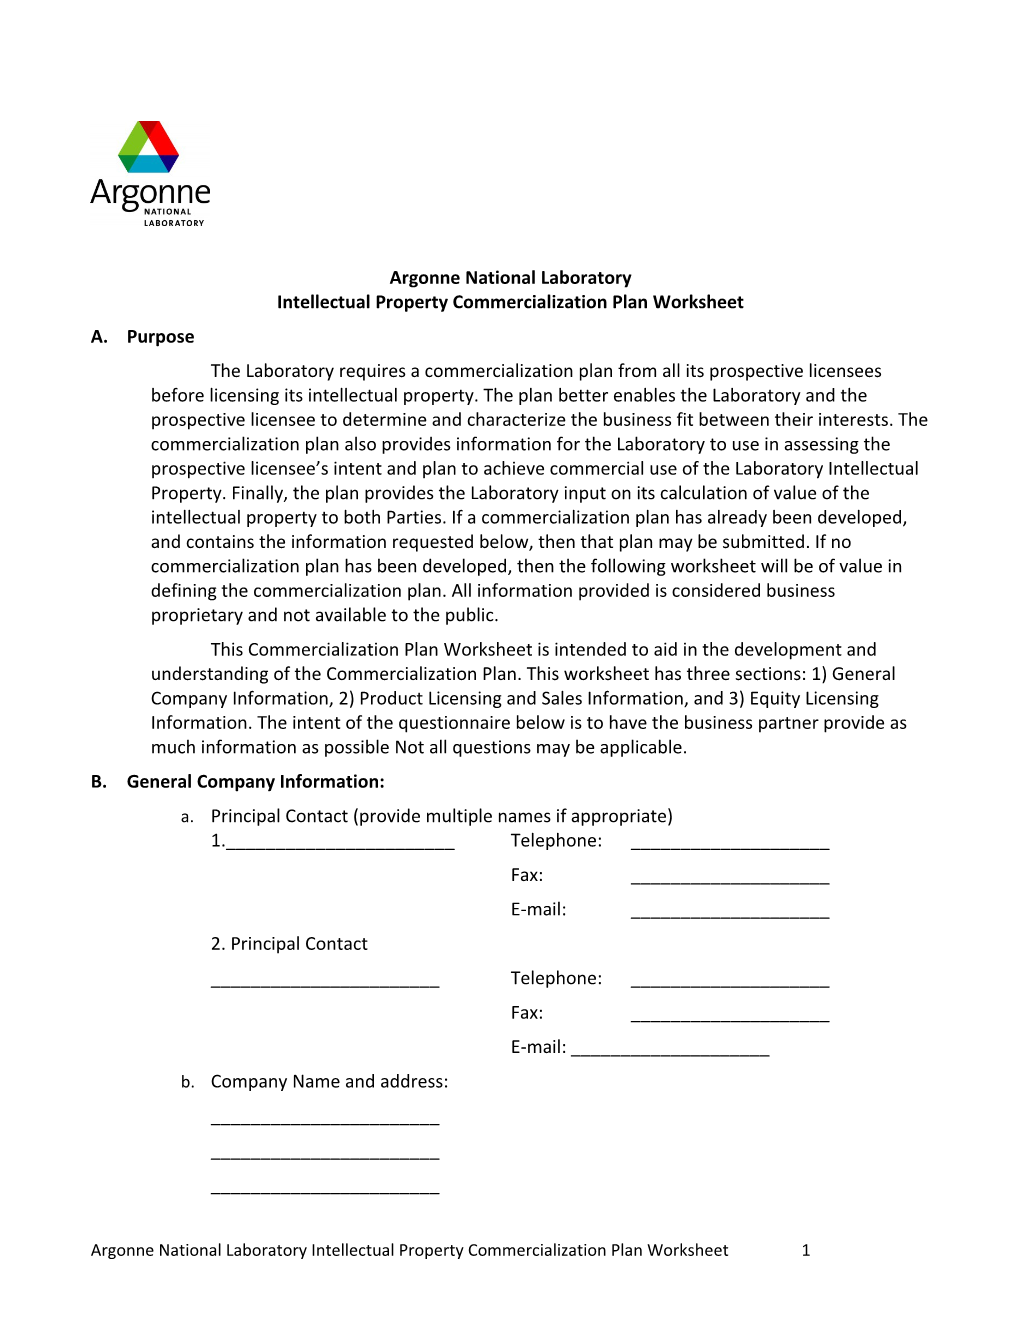 Argonne National Laboratory Intellectual Property Commercialization Plan Worksheet